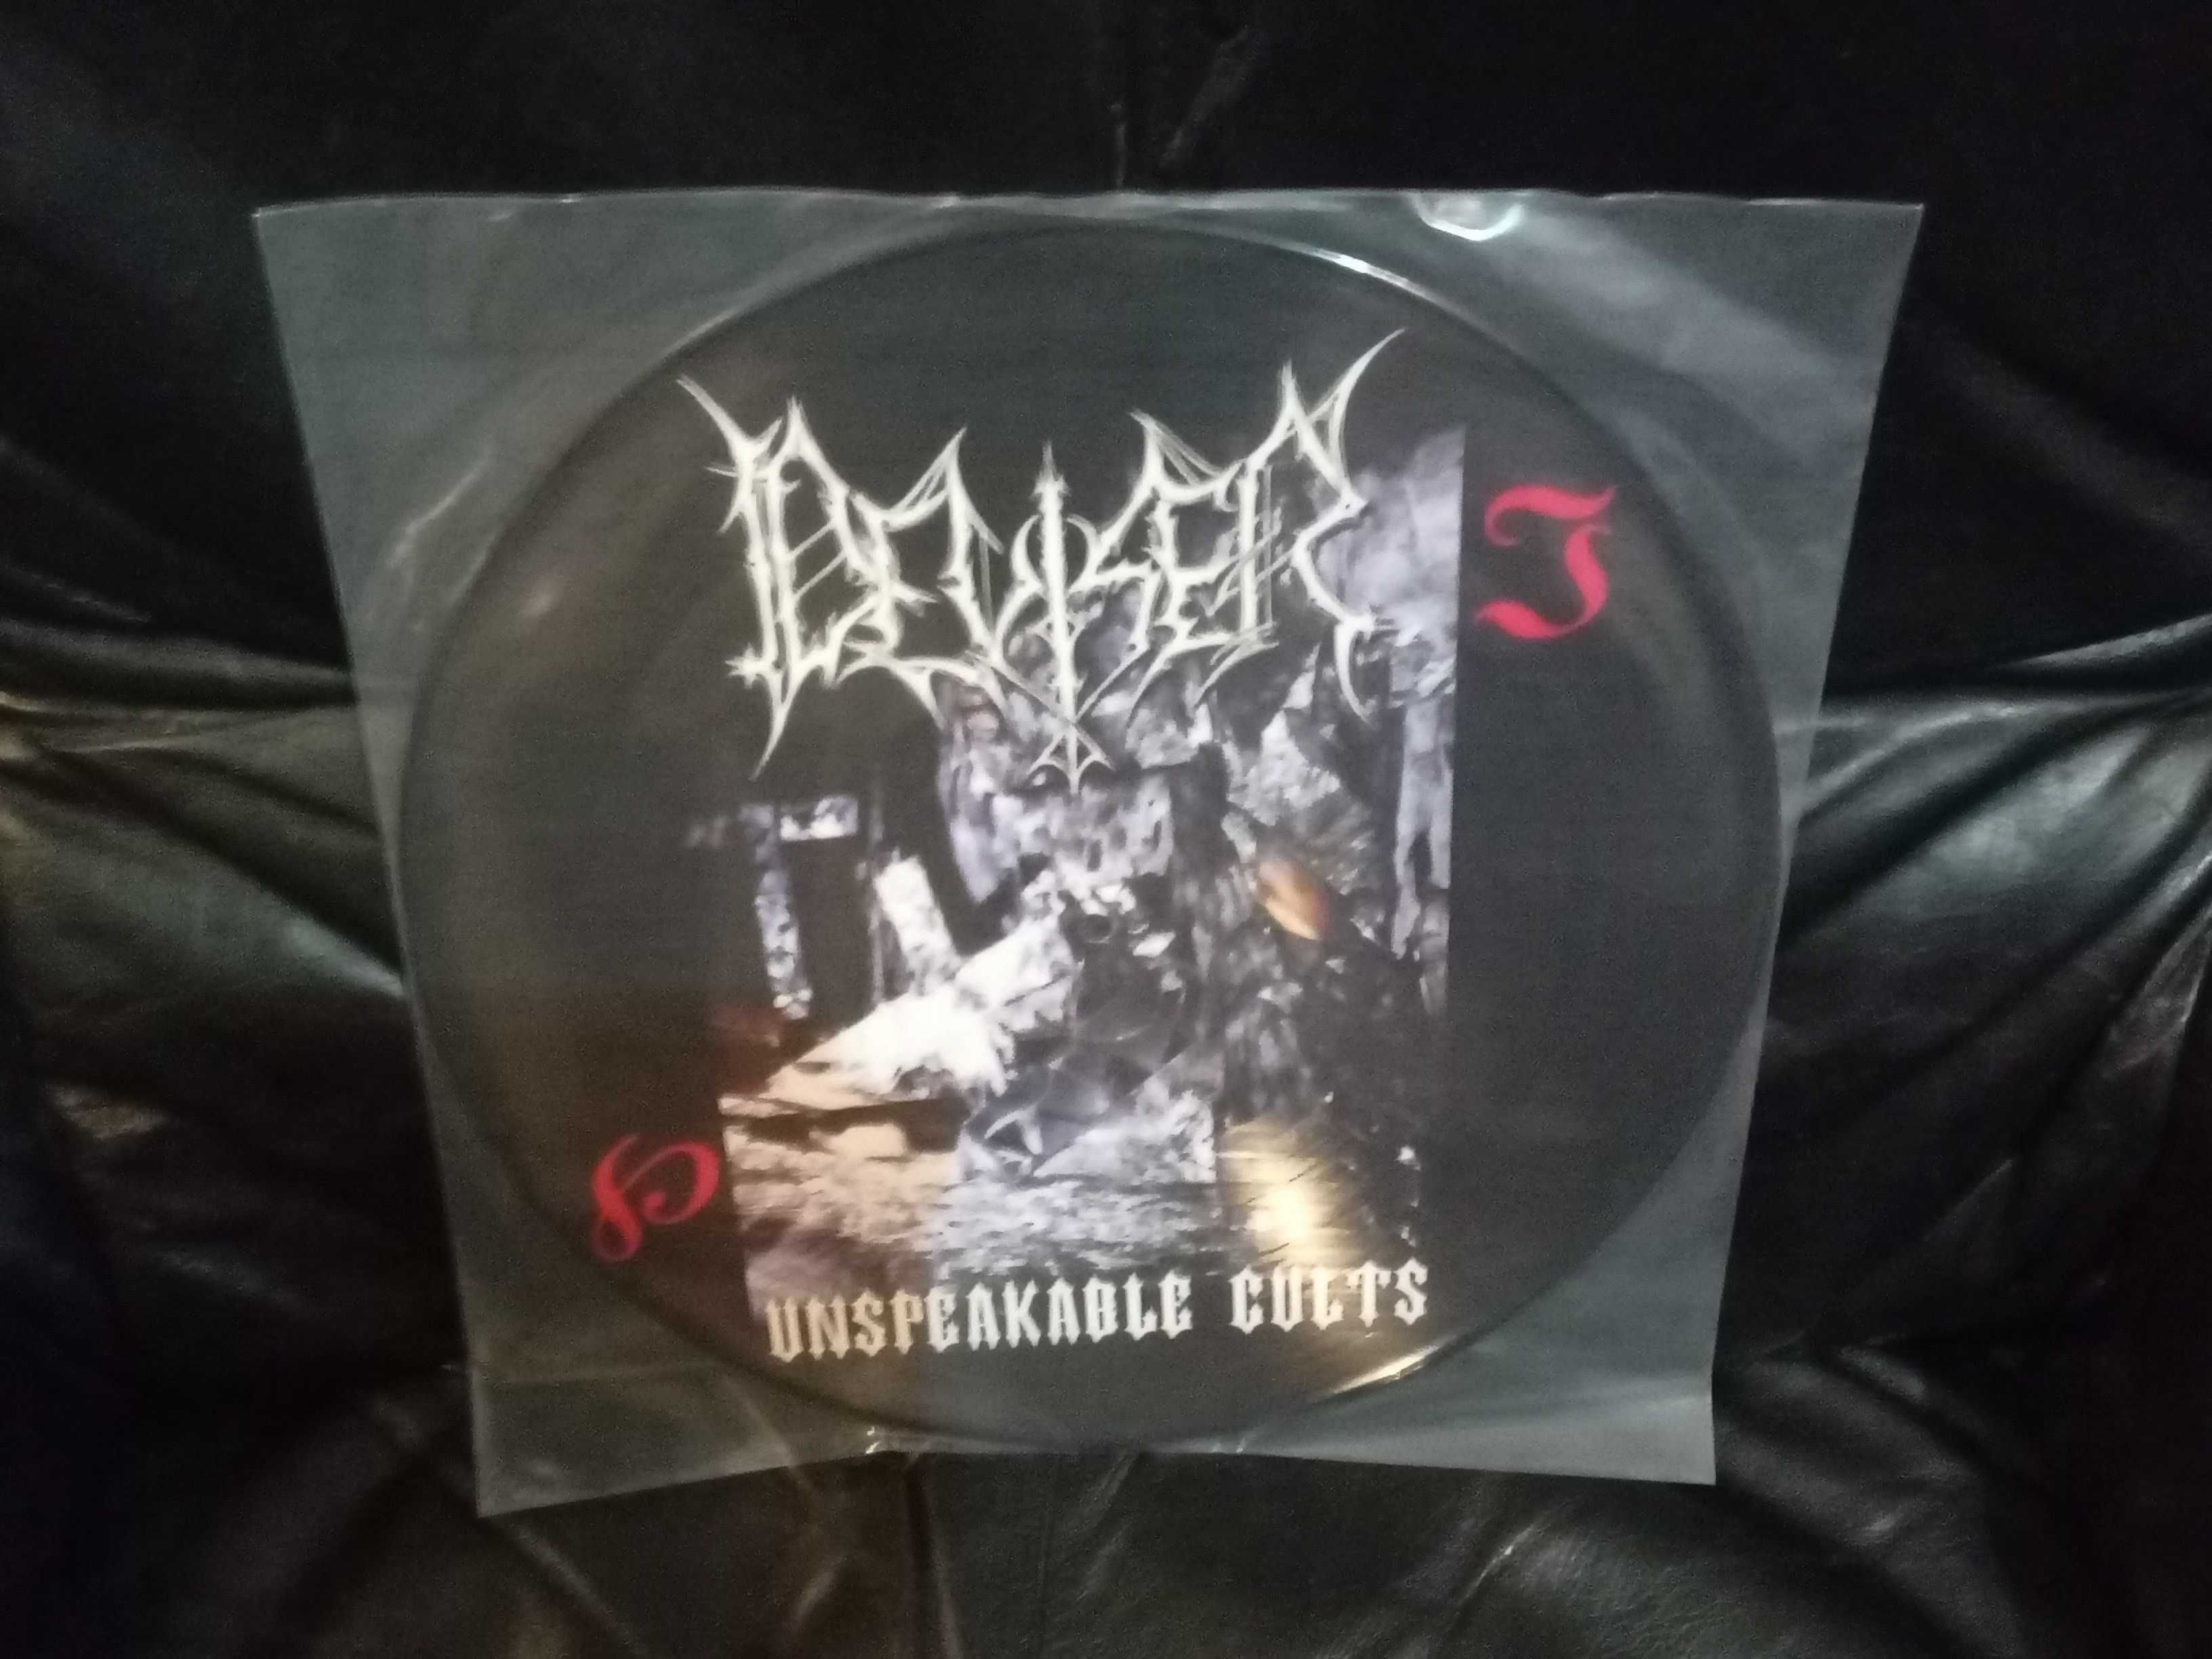 Metal - Vinyl novo, raro, edições limitadas 12" polegadas